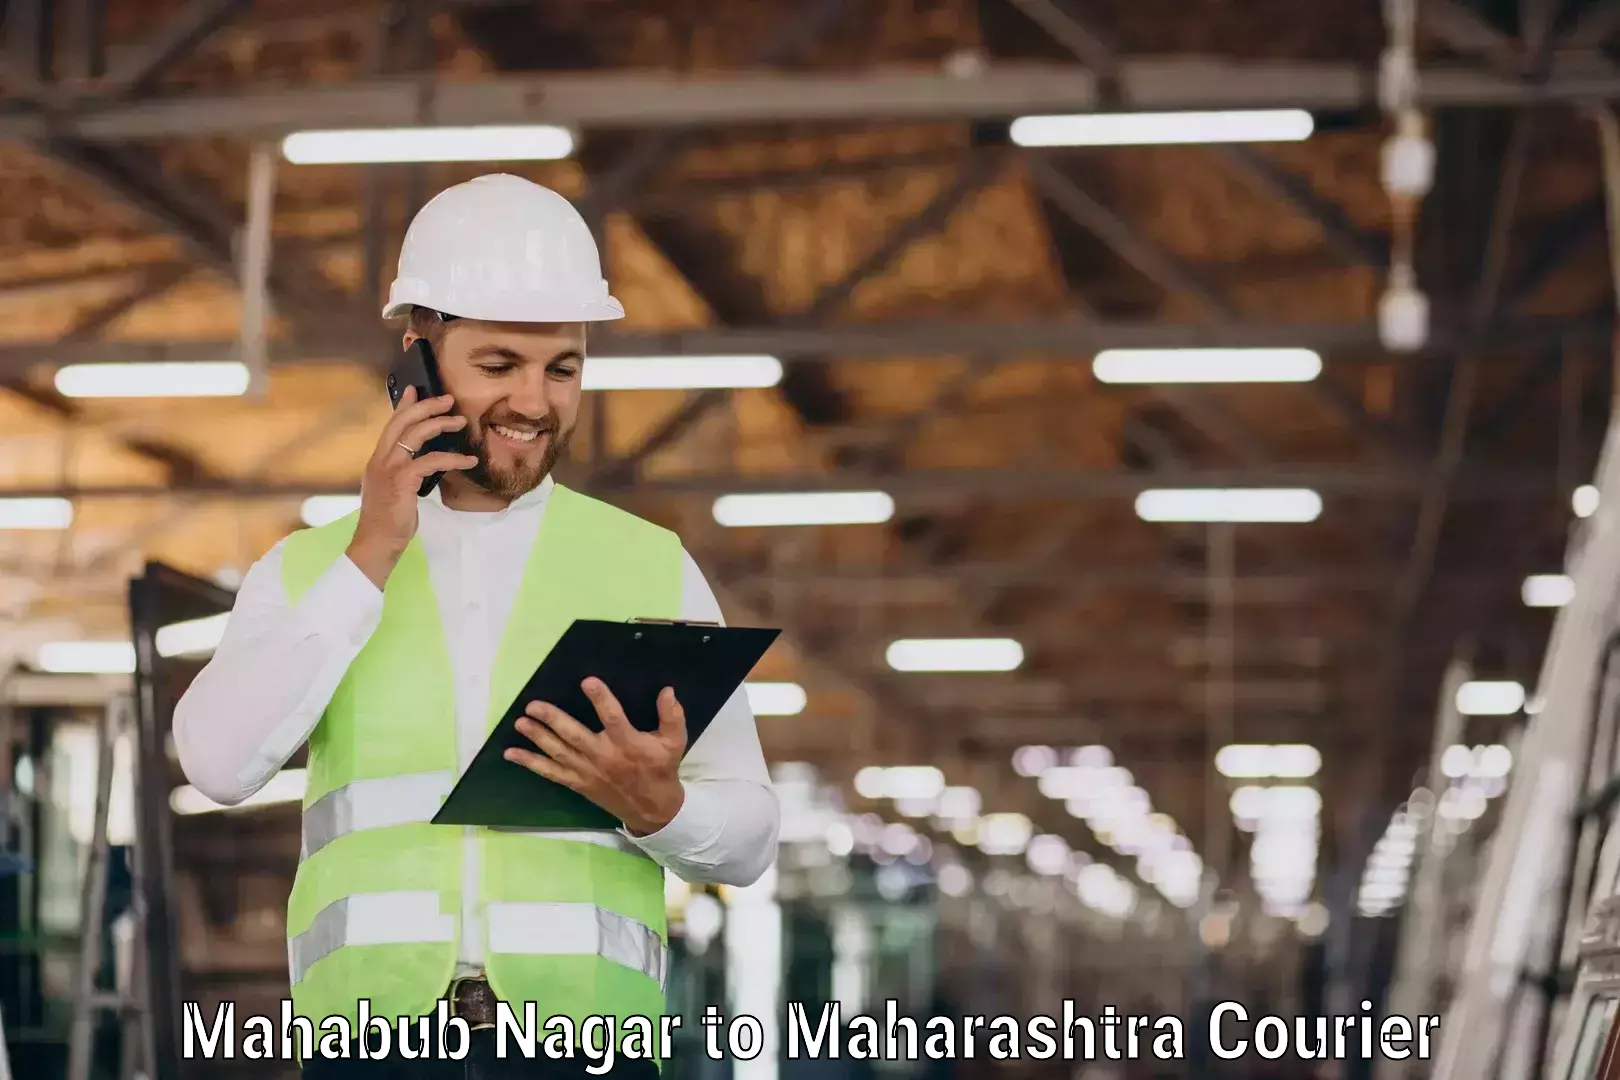 Premium courier services Mahabub Nagar to Nagpur